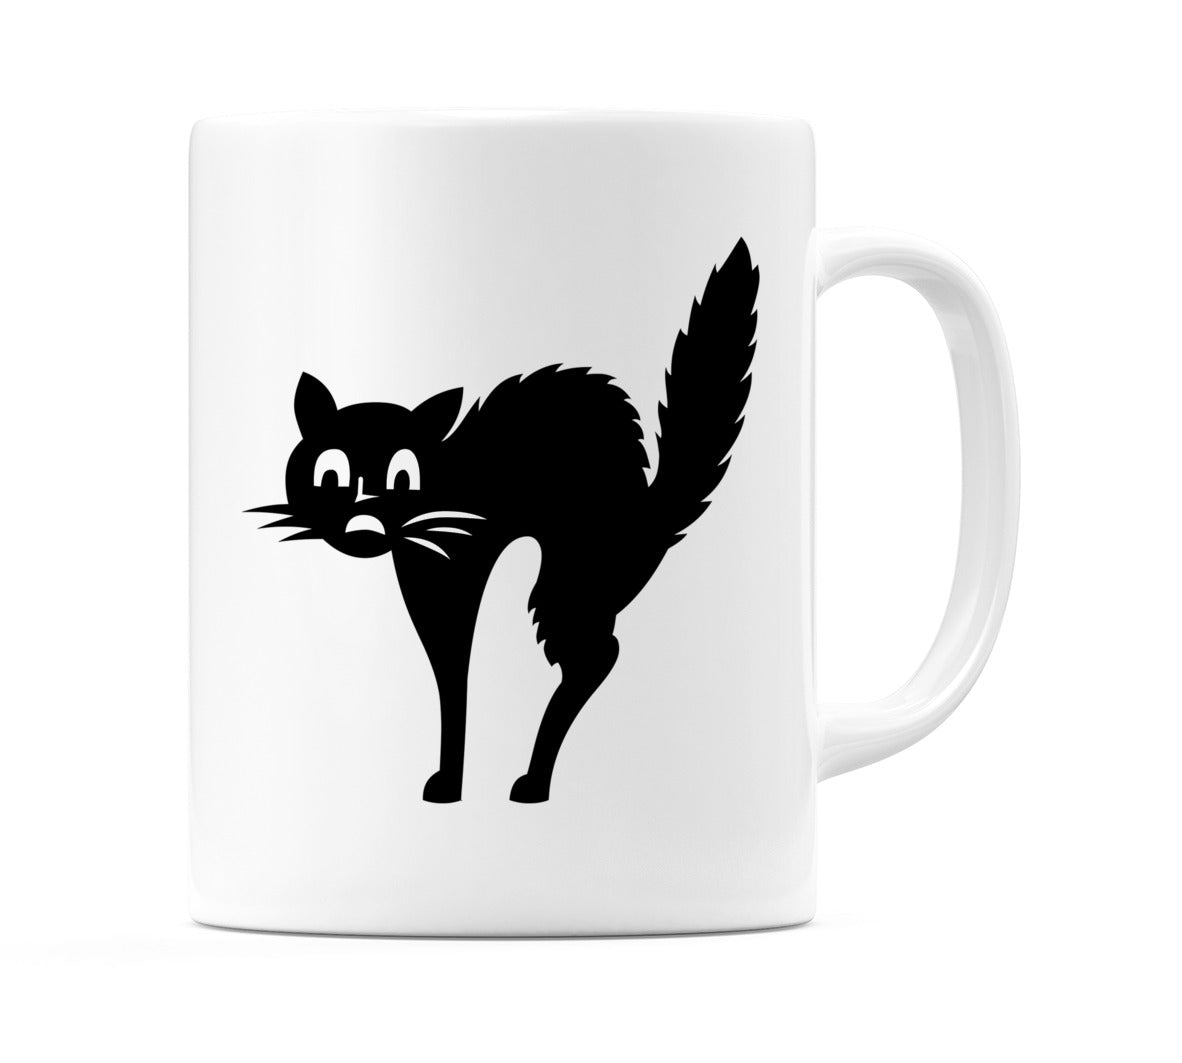 Scared Black Cat Mug